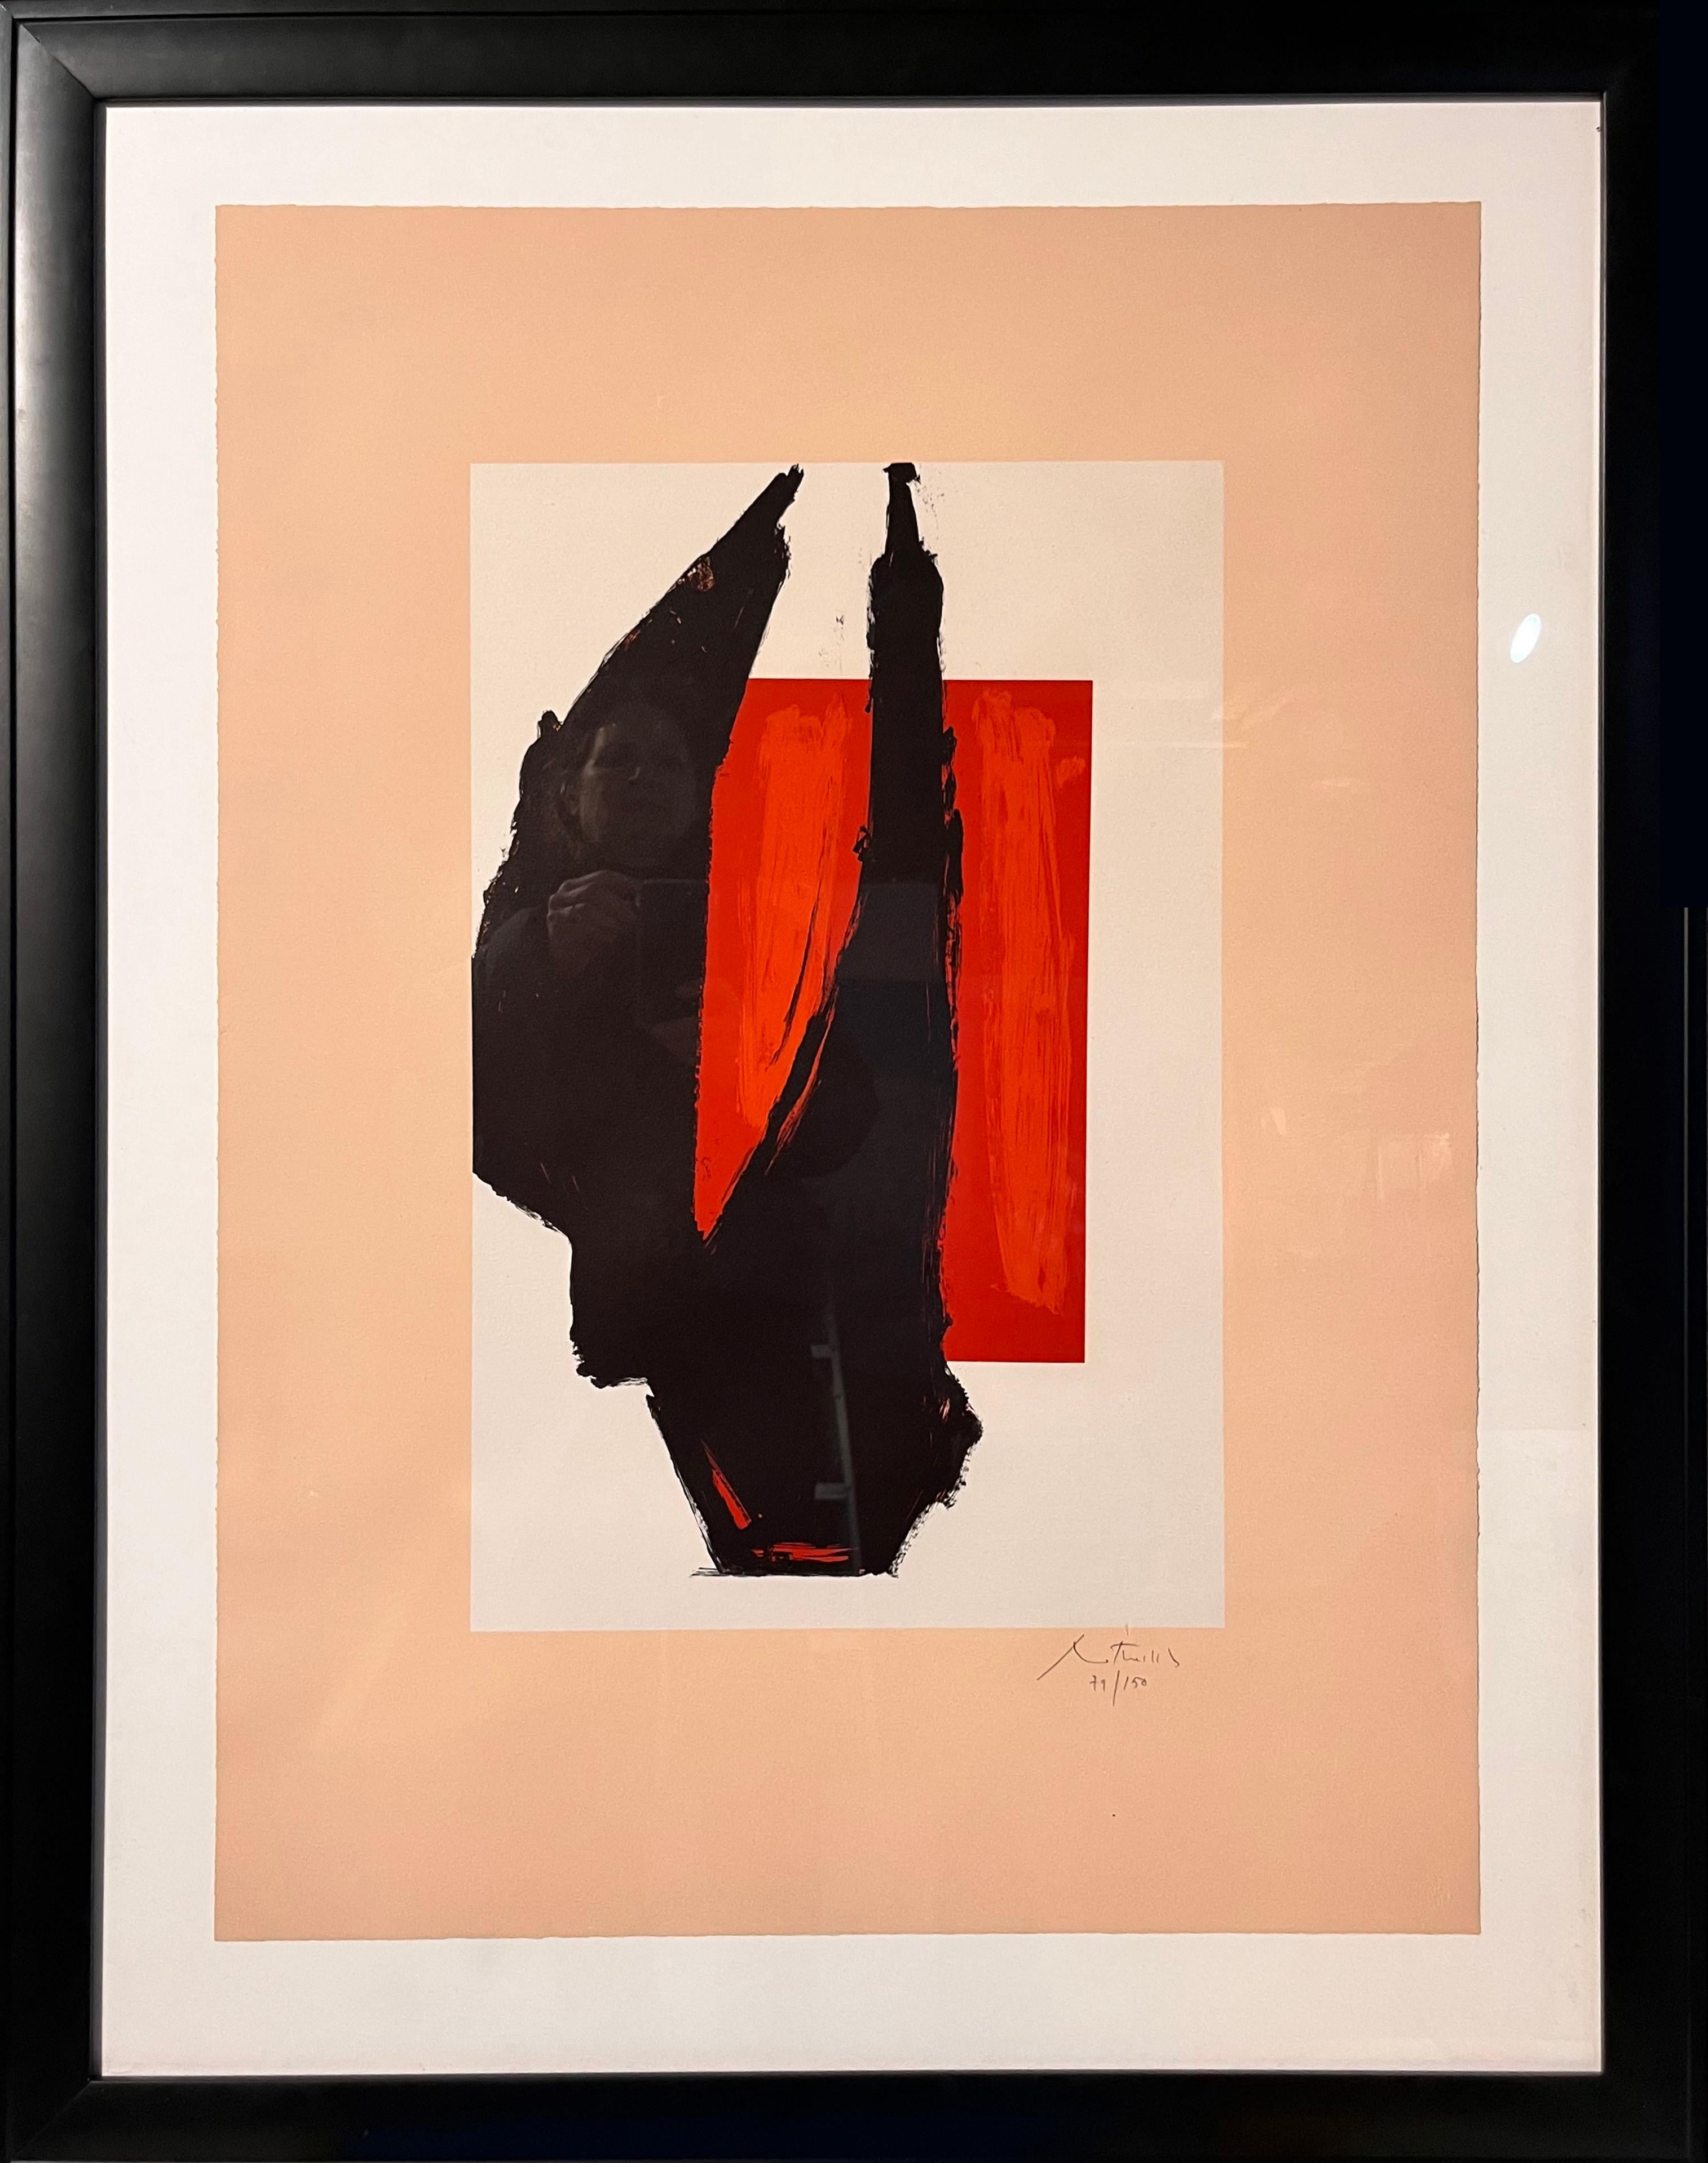 Abstract Print Robert Motherwell - Impression d'art de Chicago de 1981 (signée et numérotée) 79/150